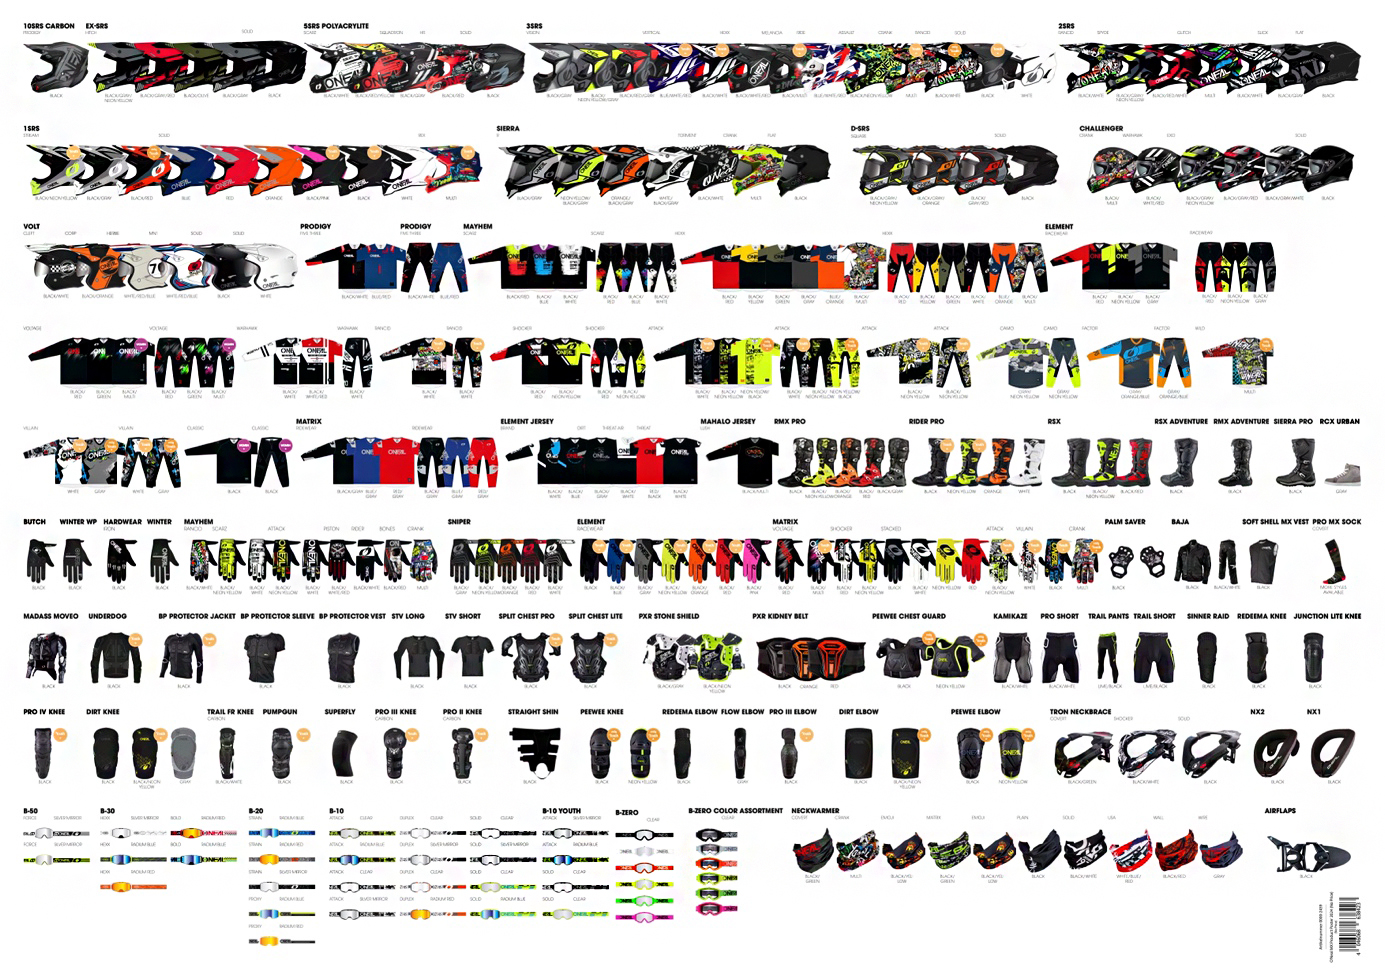 Vielfalt für den Actionsport: Auszug aus dem O’Neal-Produktsortiment für Motocross. (Bild: O'Neal)